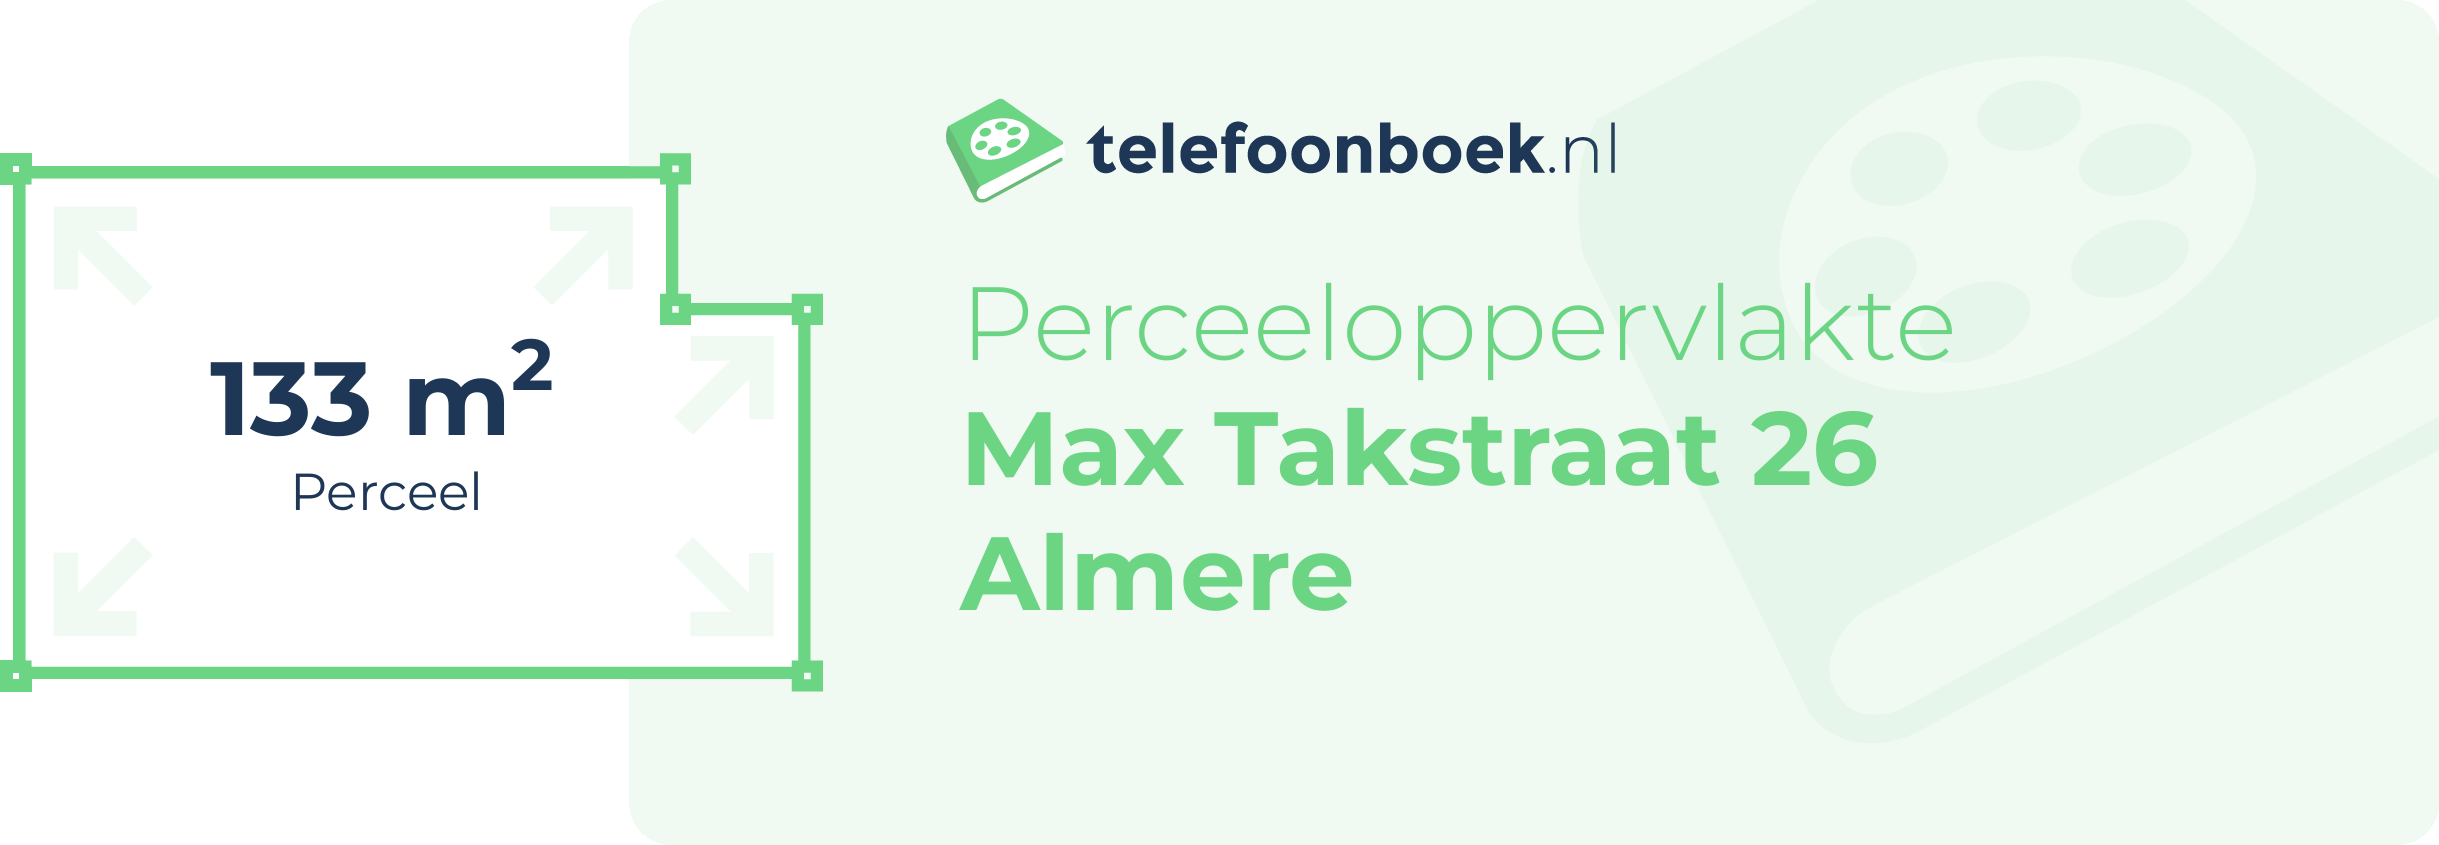 Perceeloppervlakte Max Takstraat 26 Almere